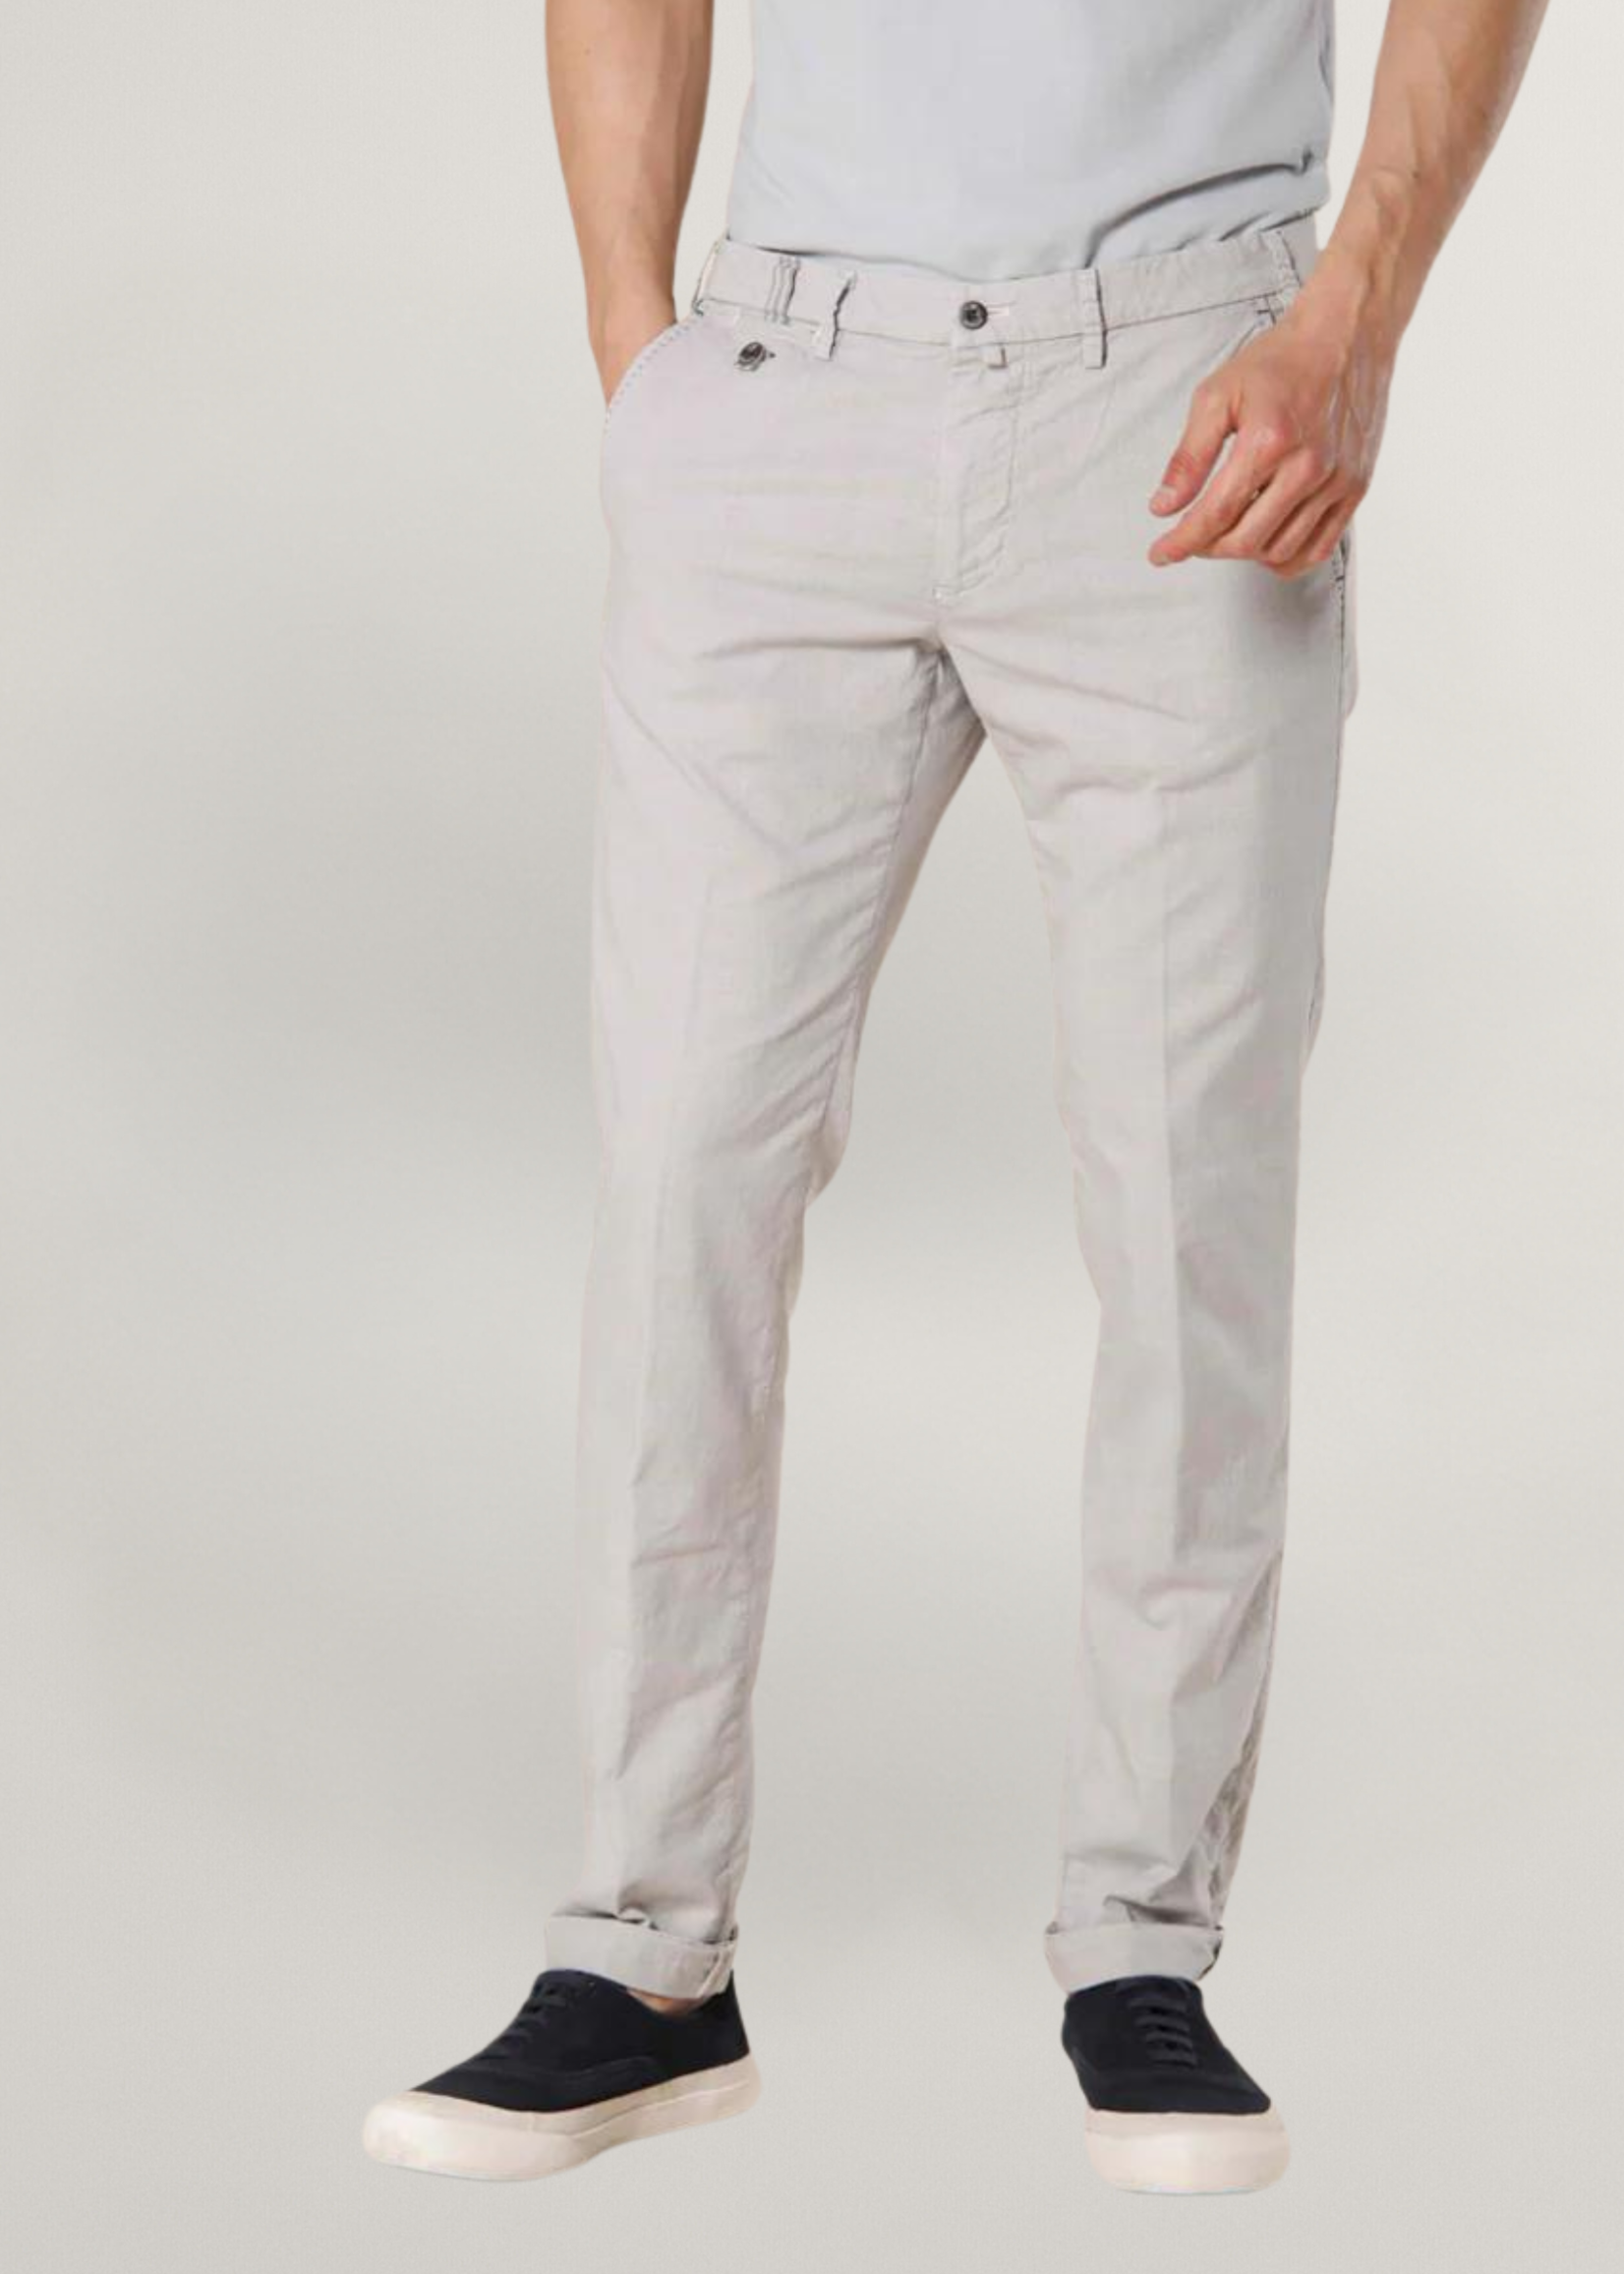 MASON'S Torino Prestige pantalon chino homme en coton lyocell à motif Prince-de-Galles coupe slim - Gris clair